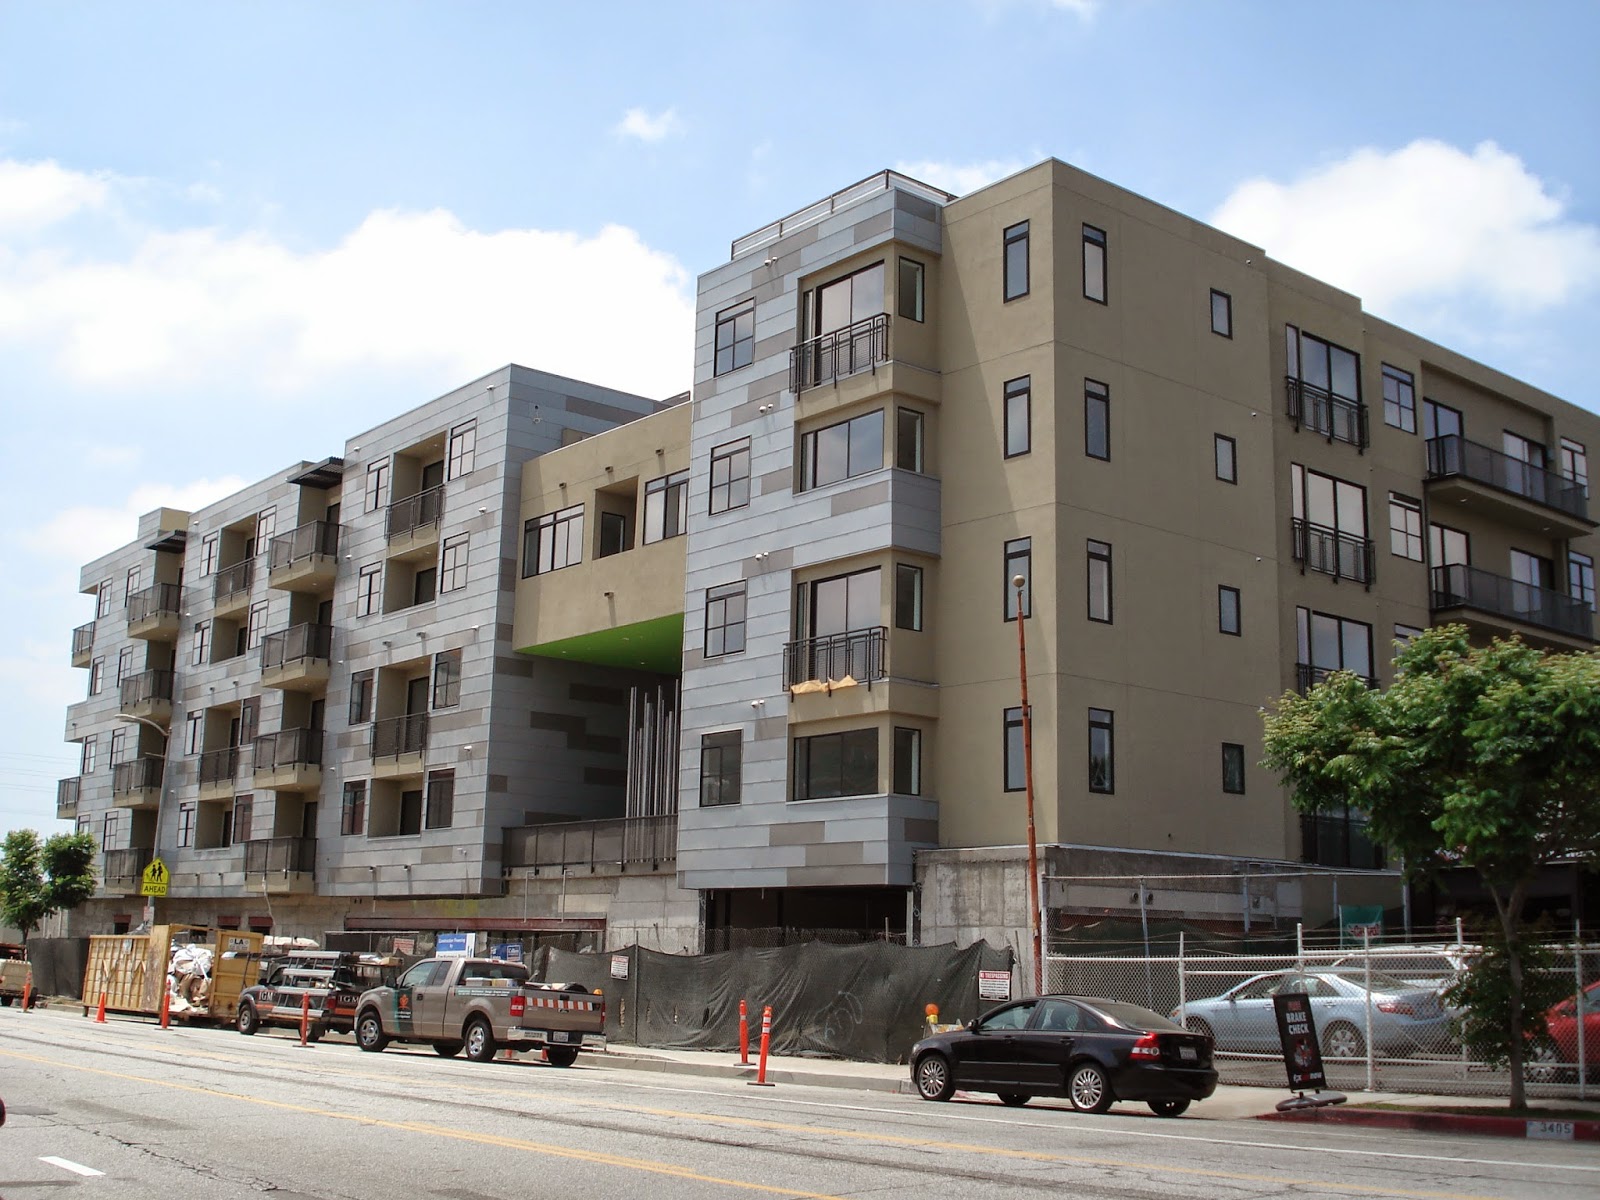 apartment complexes Apartment Complexes Los Angeles | 1600 x 1200